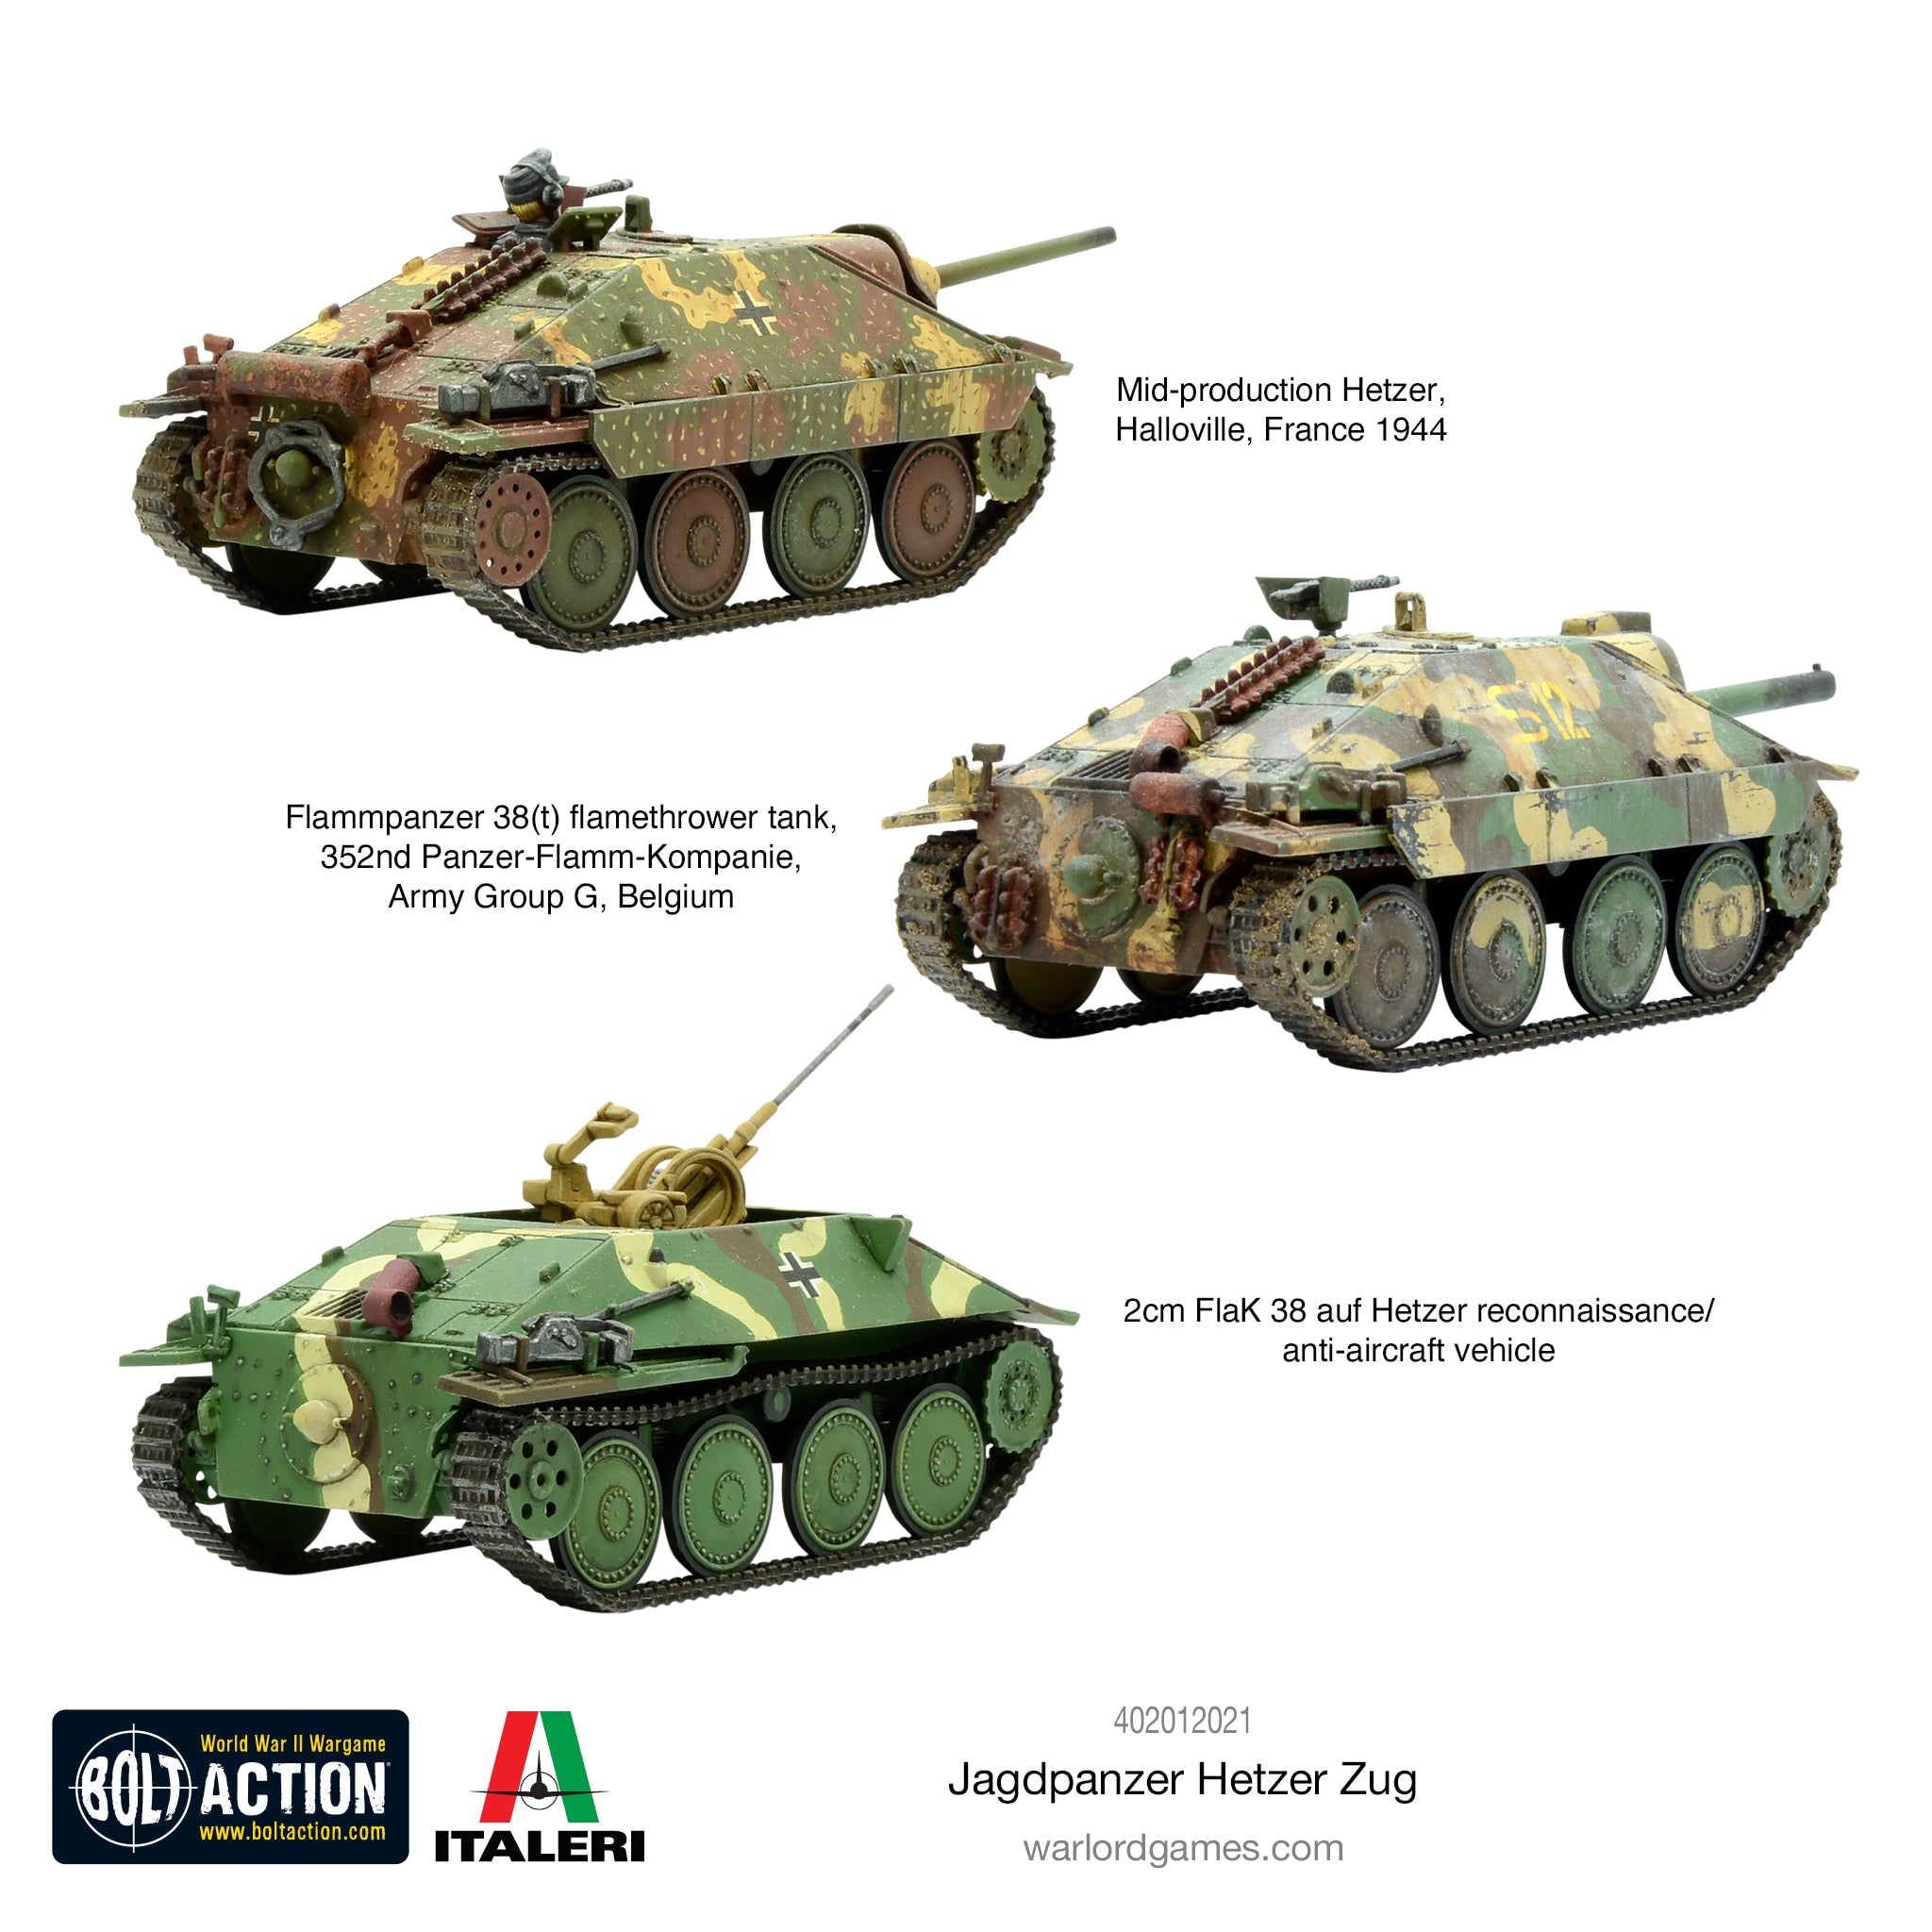 Jagdpanzer Hetzer zug